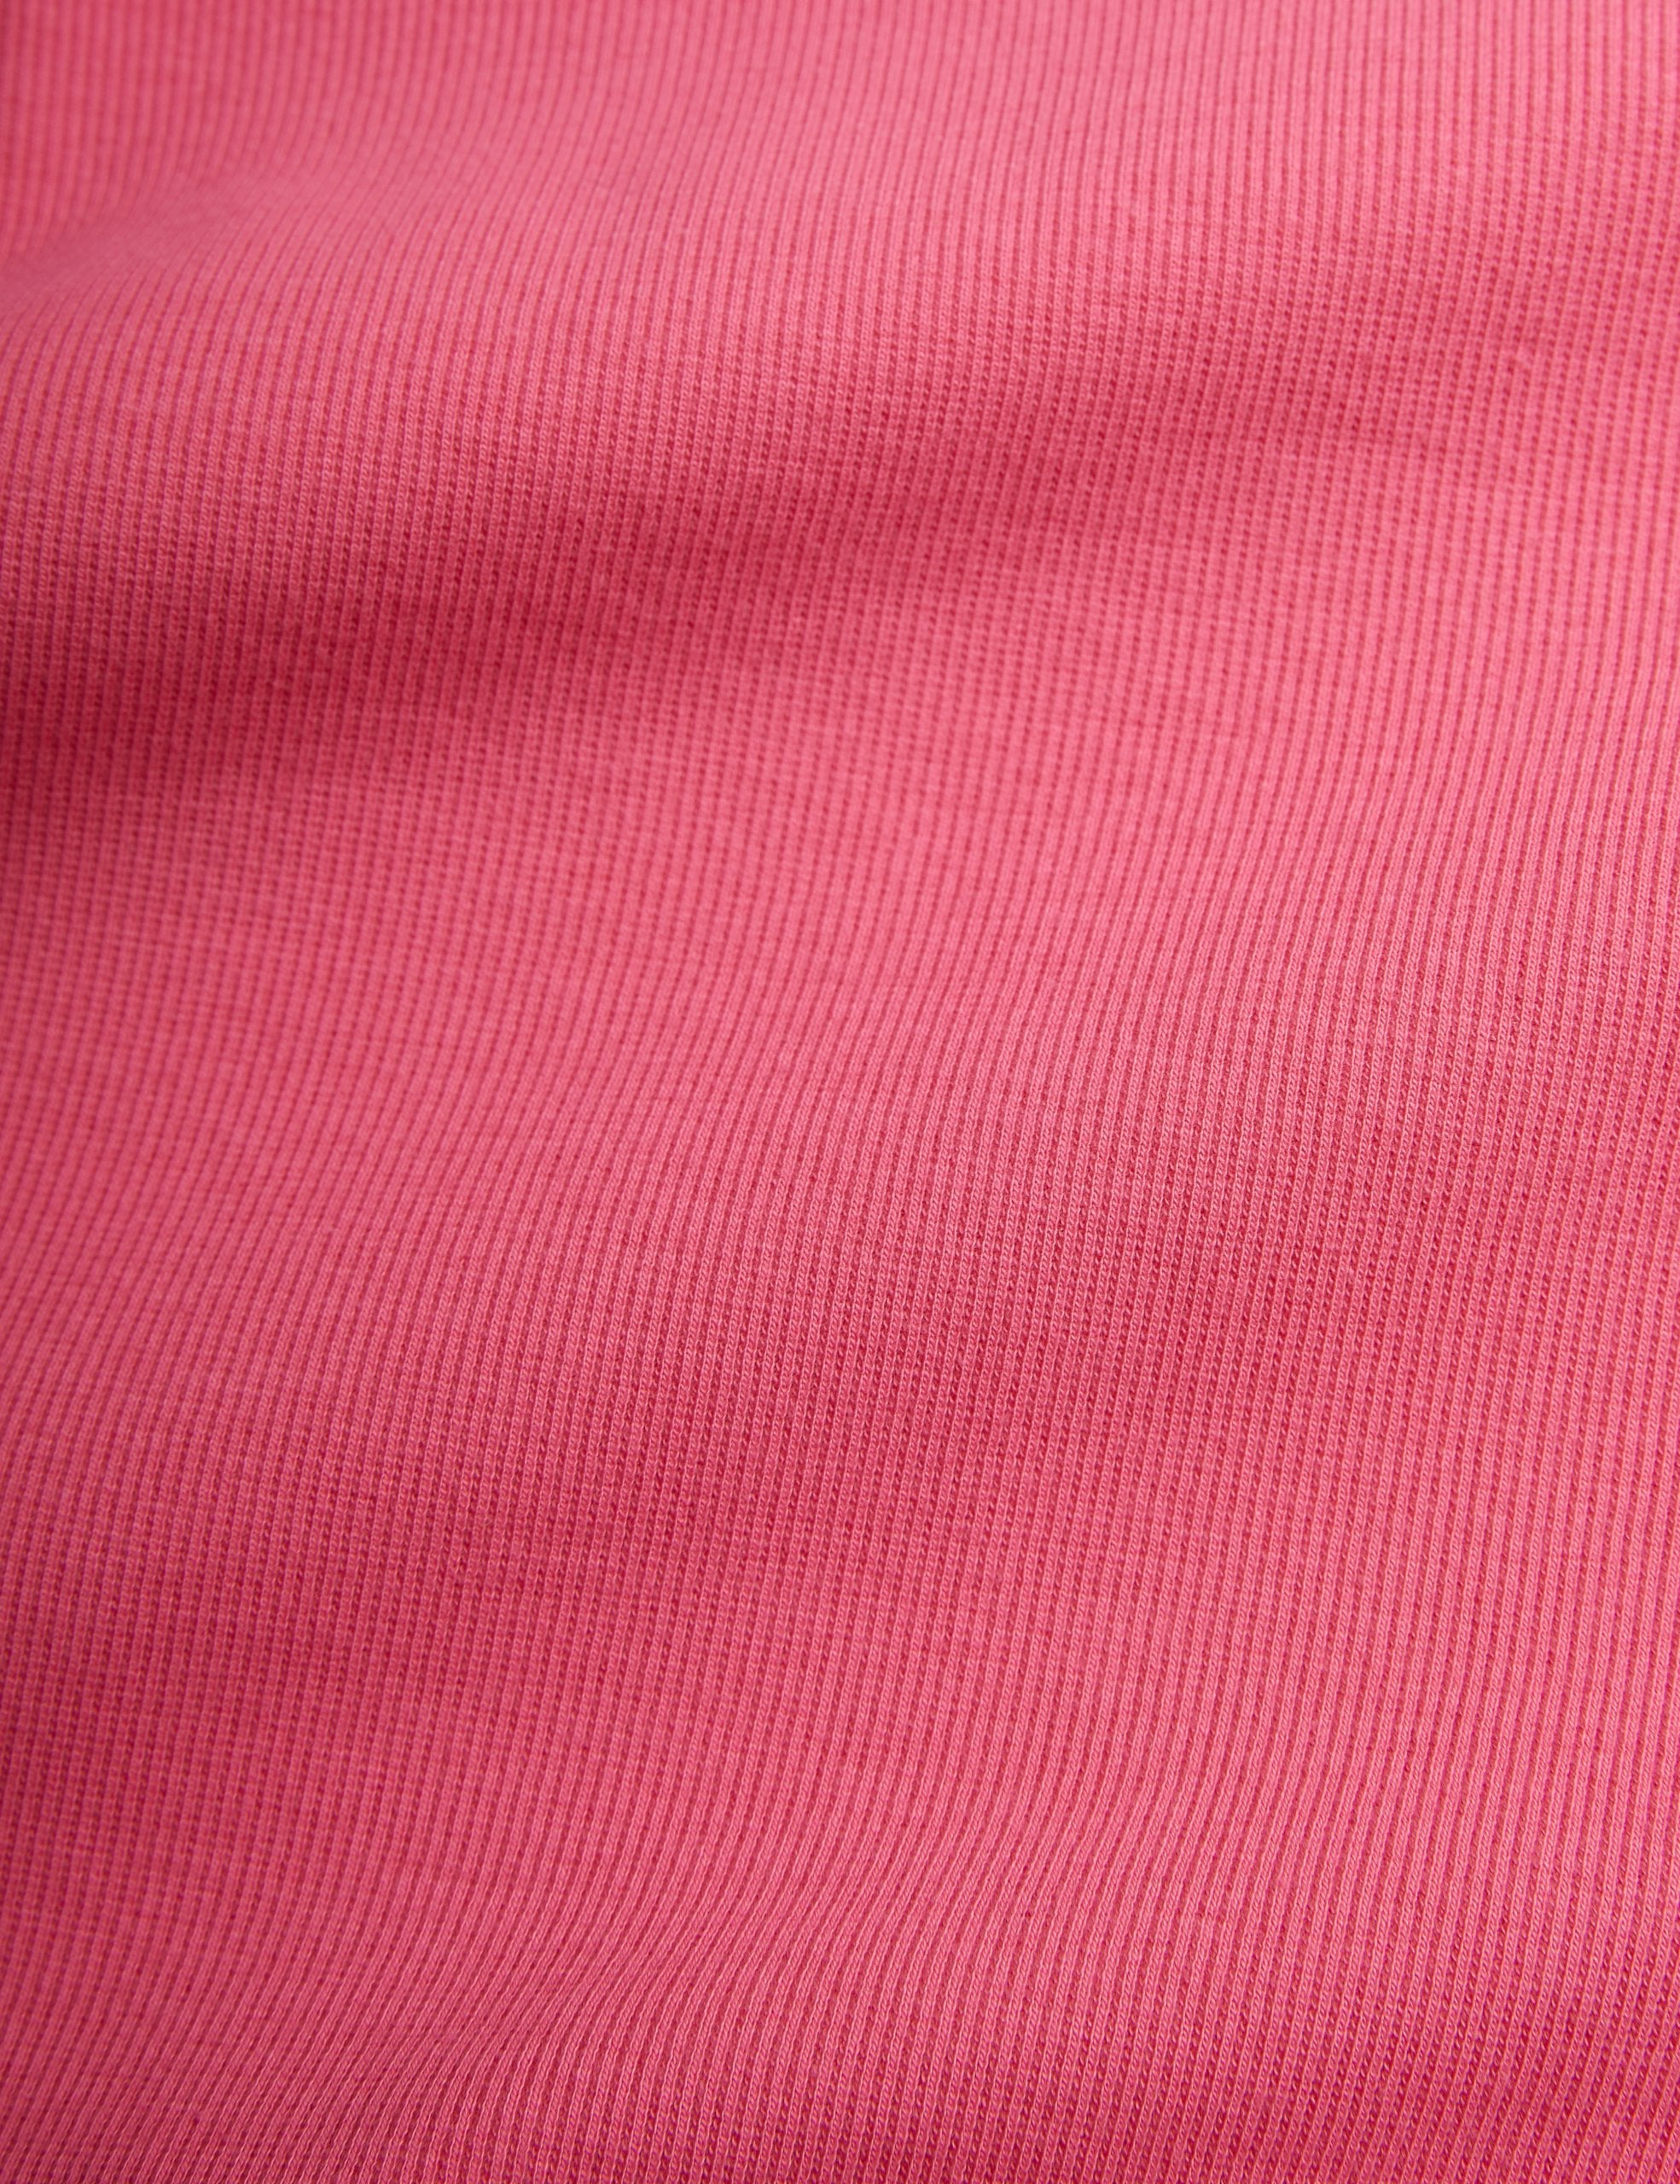 Mini Rodini | Solid rib leggings Pink